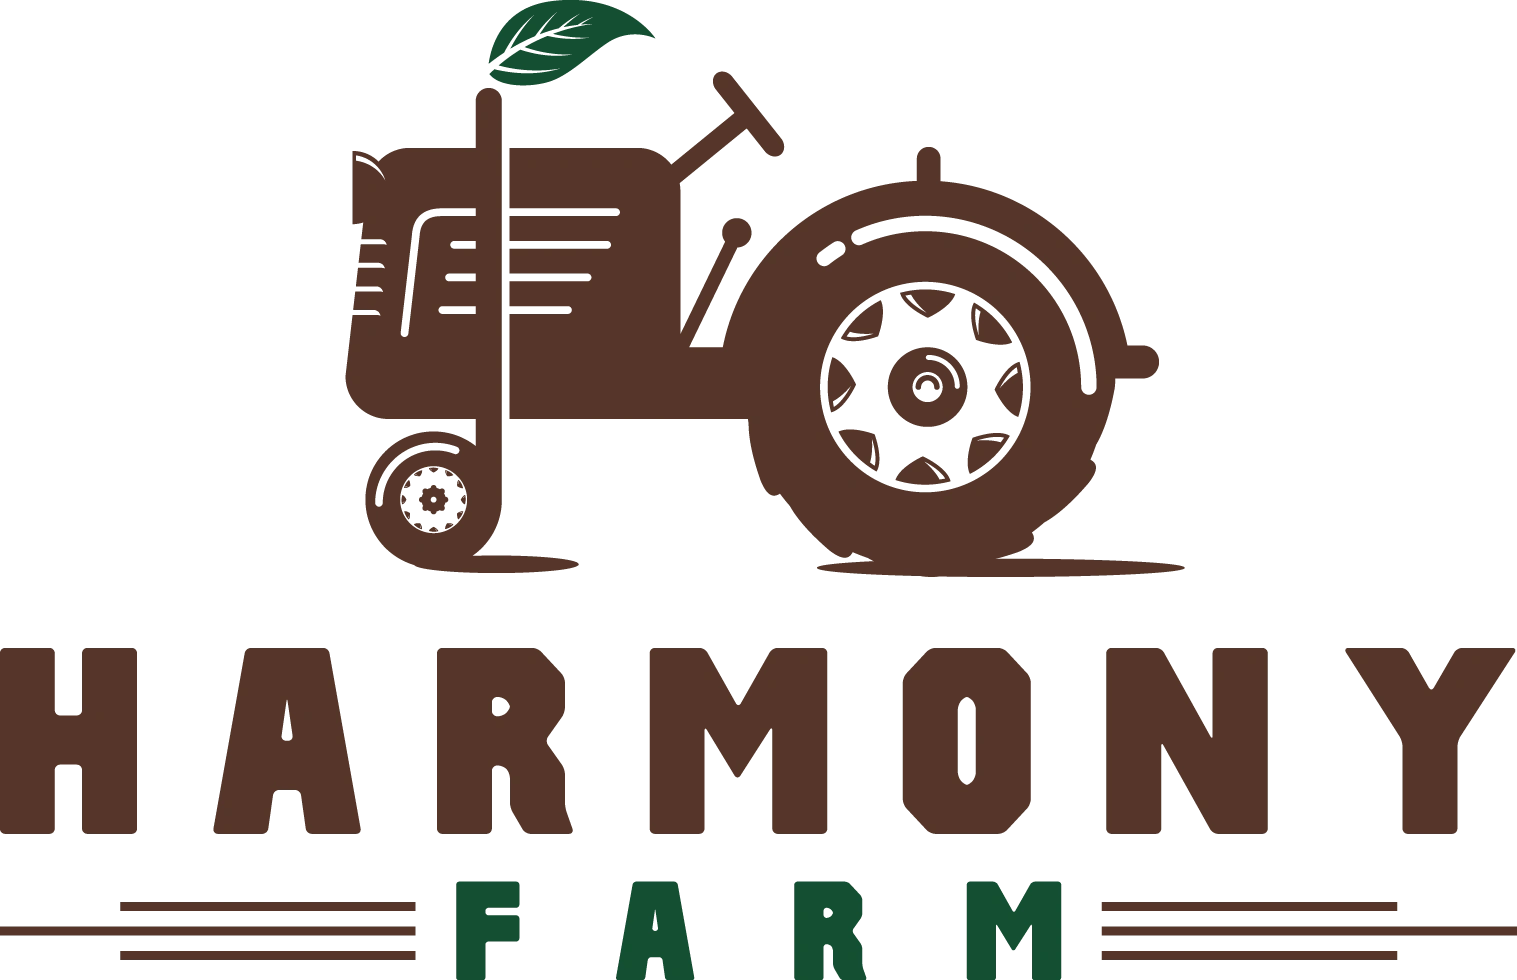 harmony farms tipp city